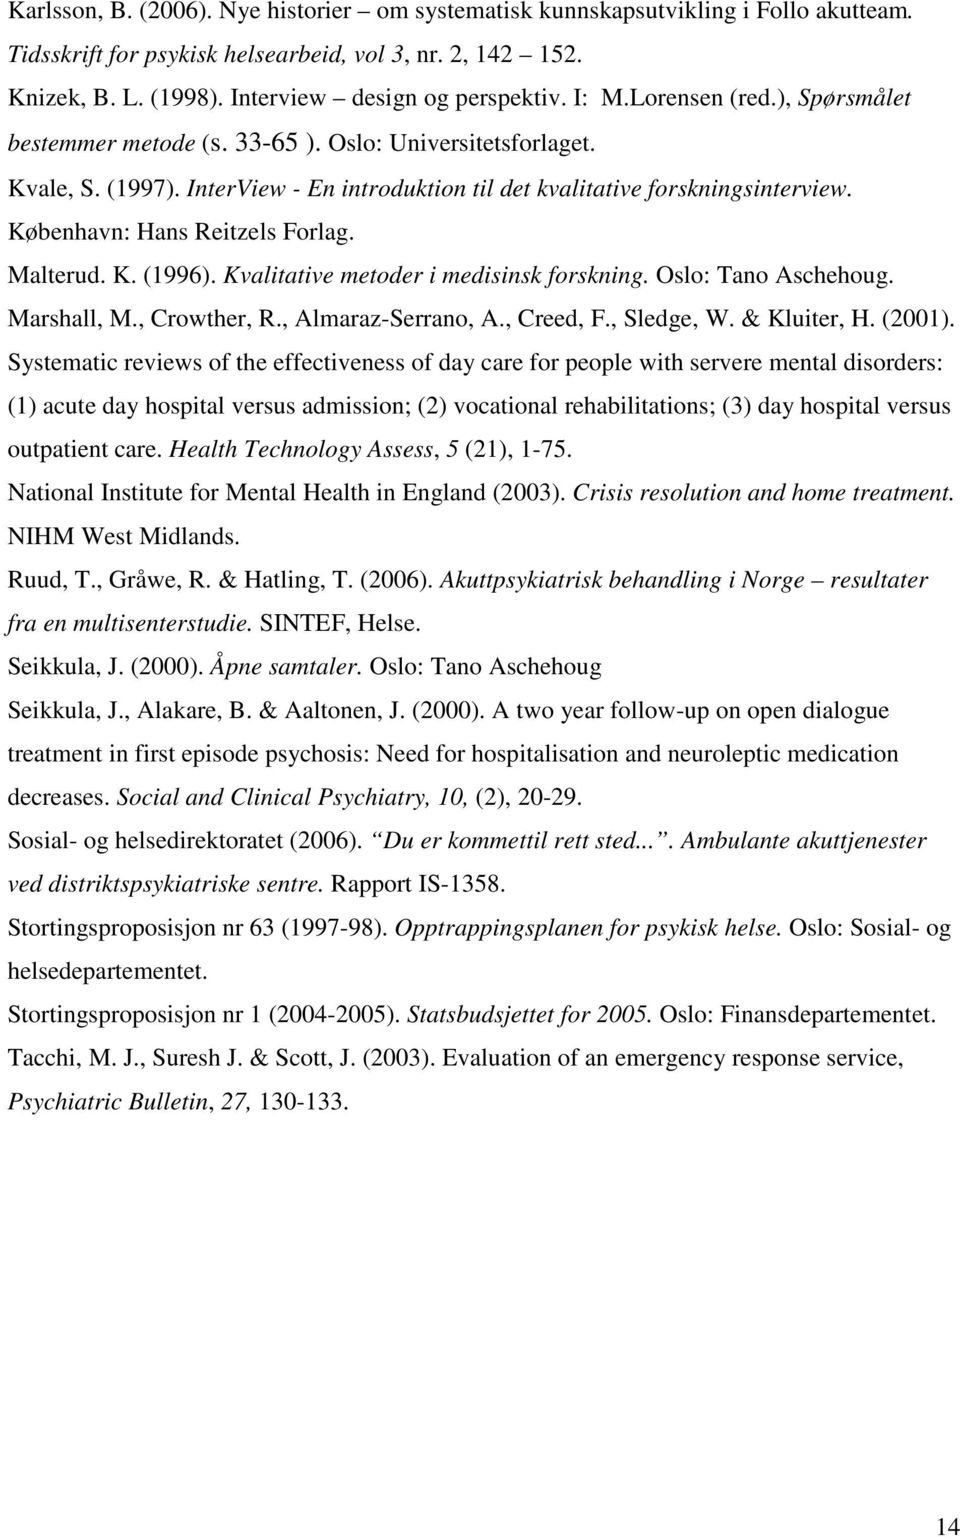 København: Hans Reitzels Forlag. Malterud. K. (1996). Kvalitative metoder i medisinsk forskning. Oslo: Tano Aschehoug. Marshall, M., Crowther, R., Almaraz-Serrano, A., Creed, F., Sledge, W.